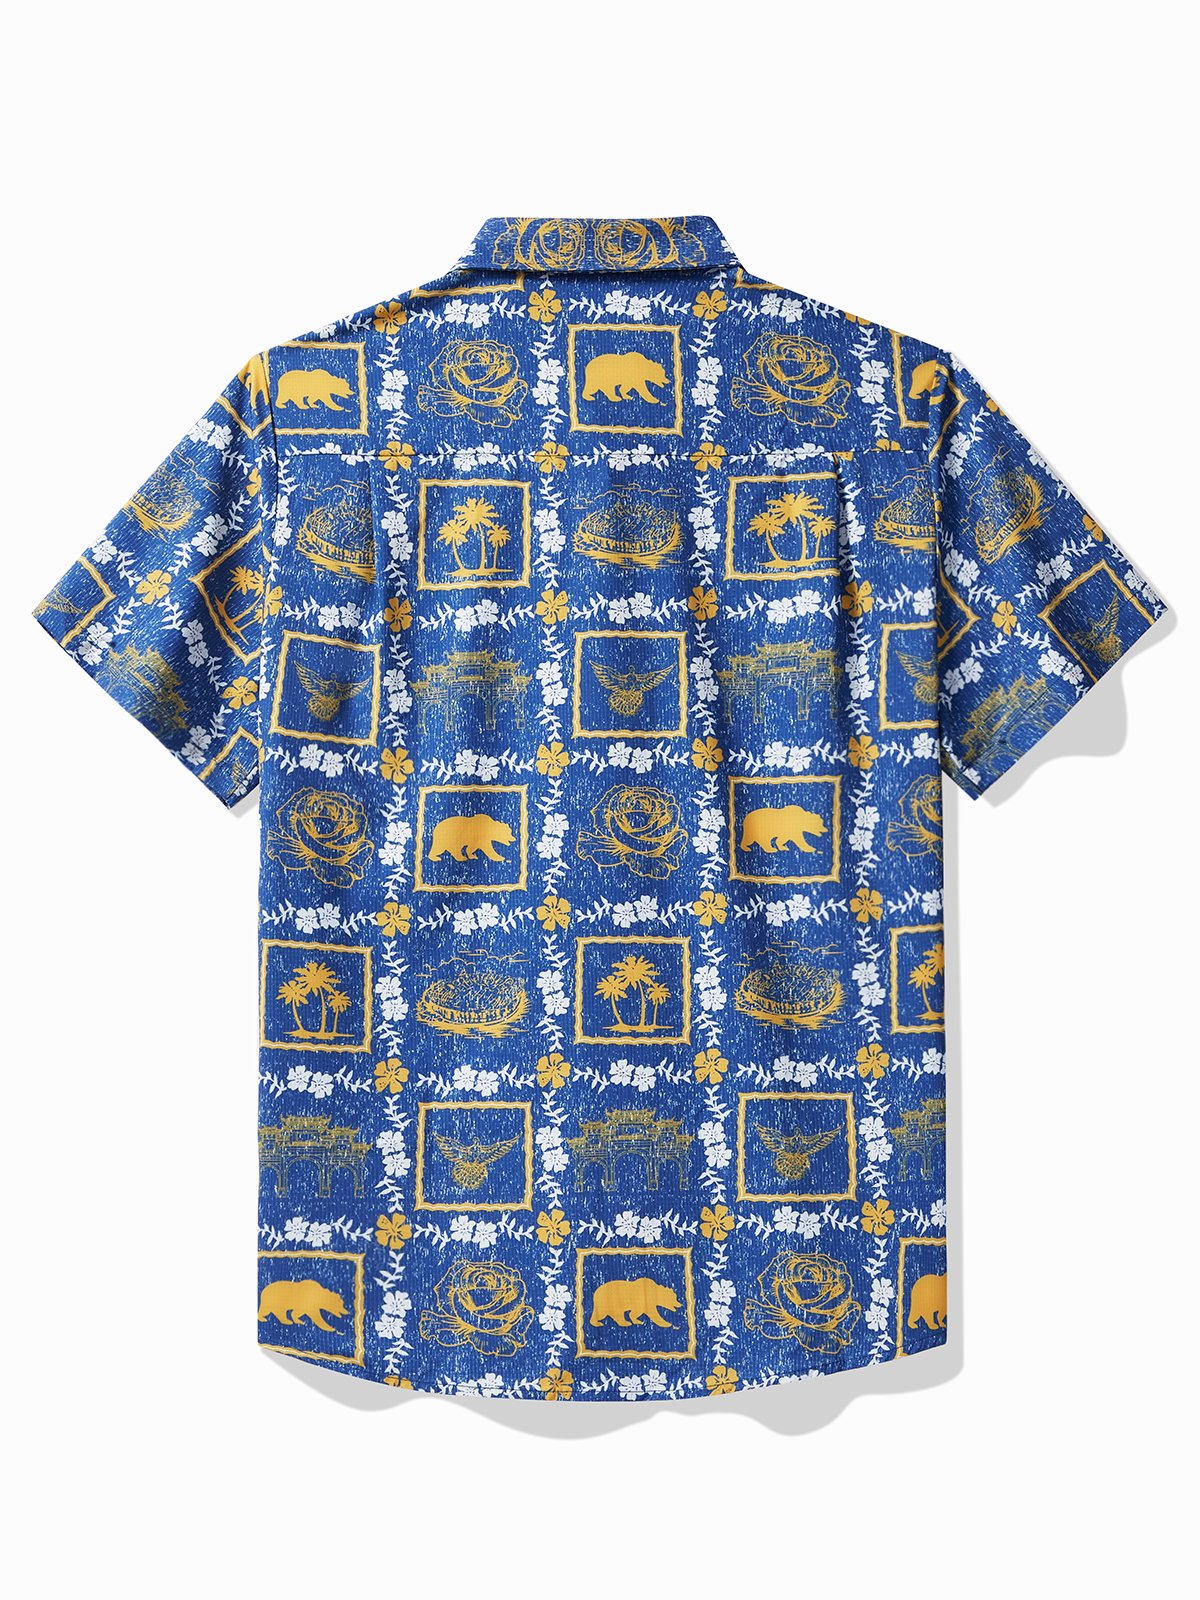 JoyMitty Hawaiian Coconut Tree Print Men's Button Pocket Quick Dry  Cool Ice Shirts  Sweat-wicking Shirt